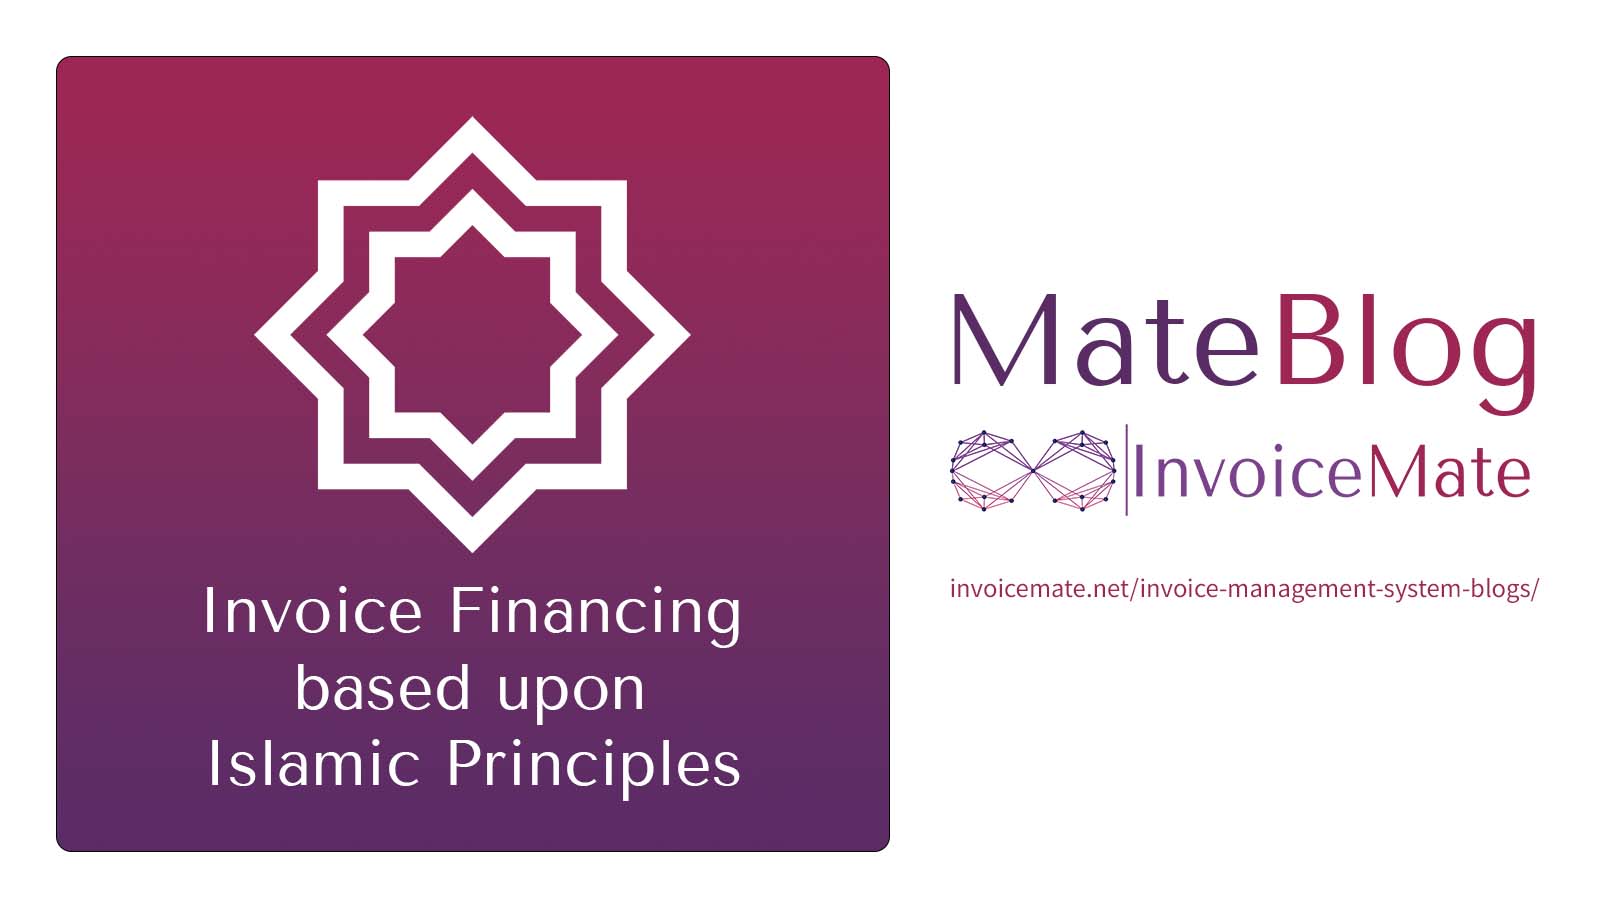 Invoice Financing based upon Islamic Principles